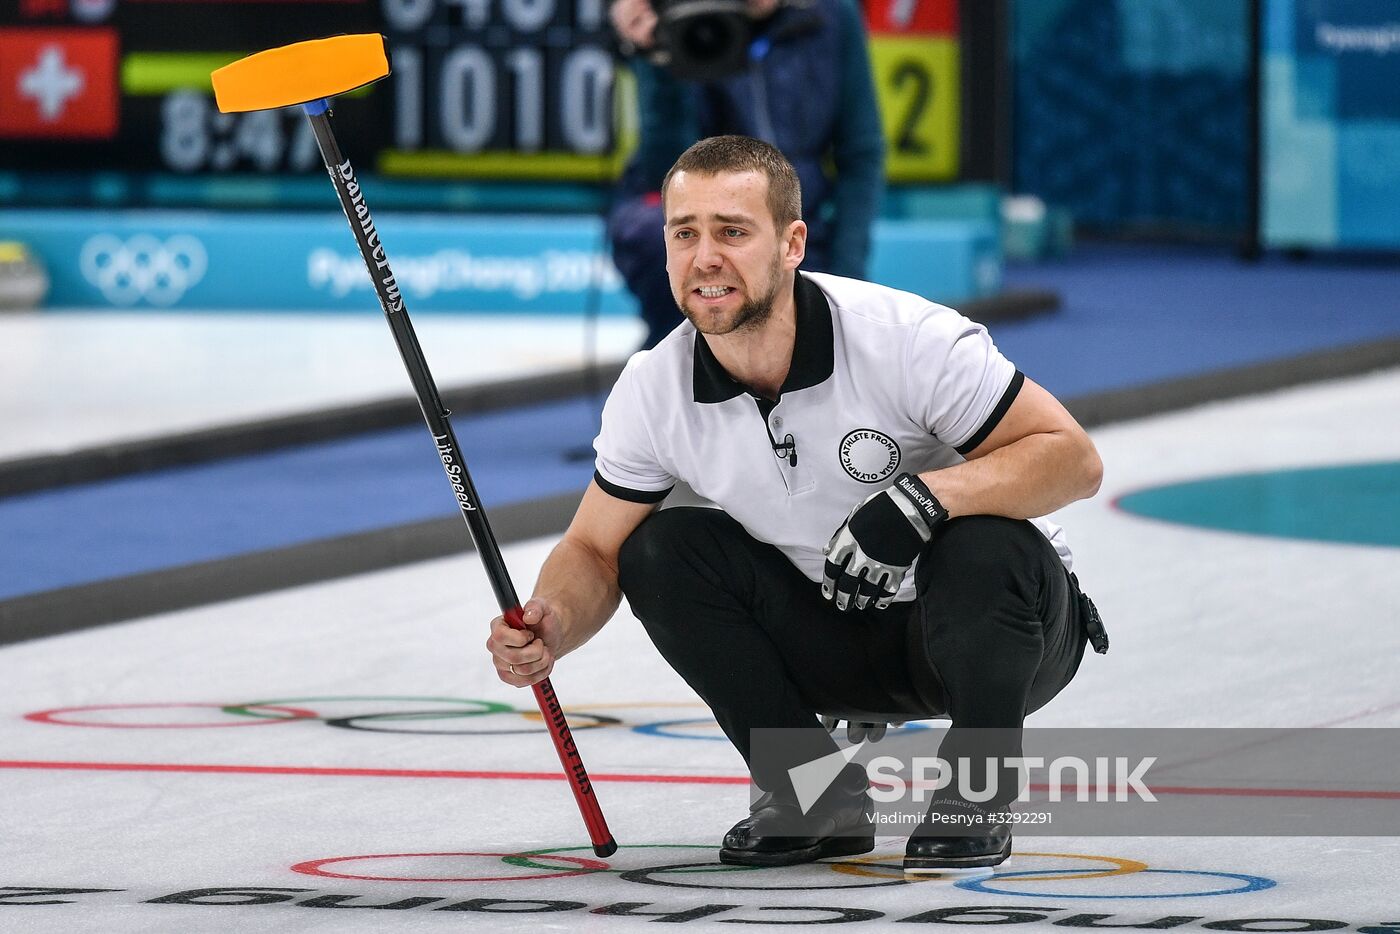 Winter Olympics 2018. Curling. Mixed doubles. Republic of Korea vs. OAR